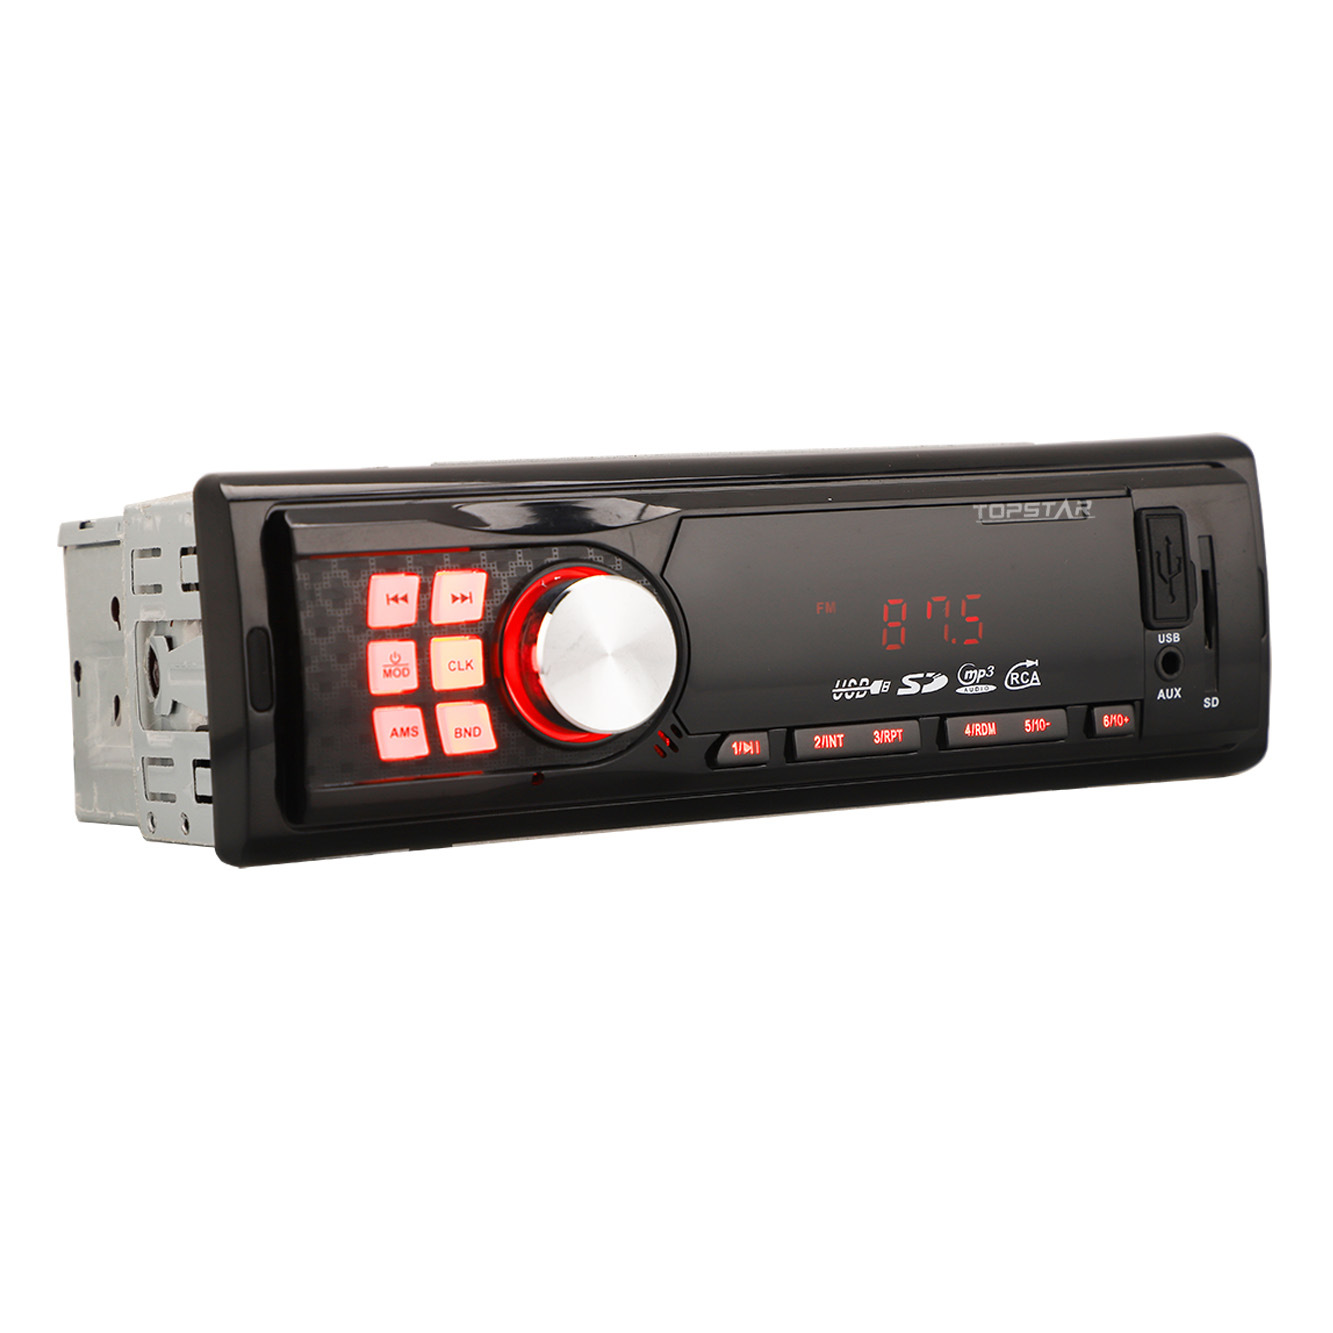 FM Transmitter Audio Auto Audio Car Stereo Car Audio Car Accessories Car Radio with FM Car MP3 Audio Player